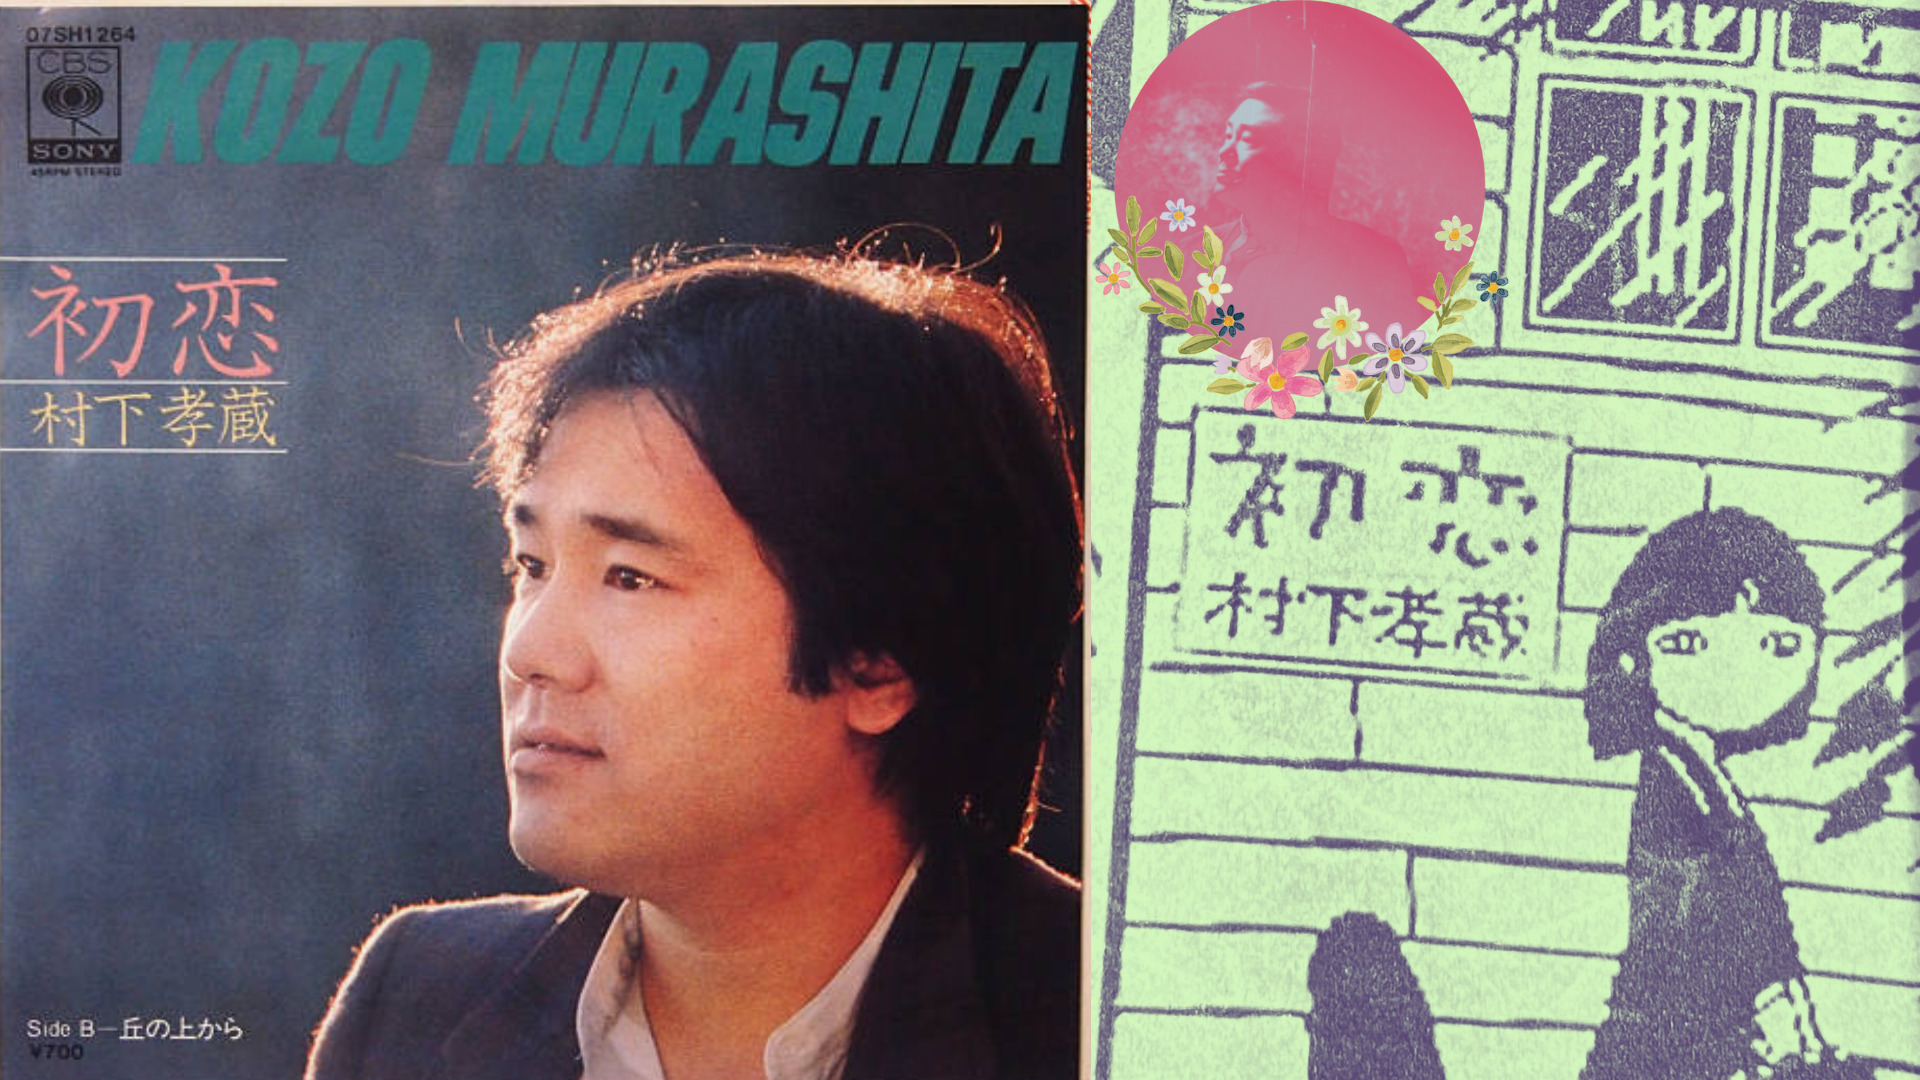 Hatsukoi(First Love)by Kozo Murashita-Lyrics interpretation, Song appreciation